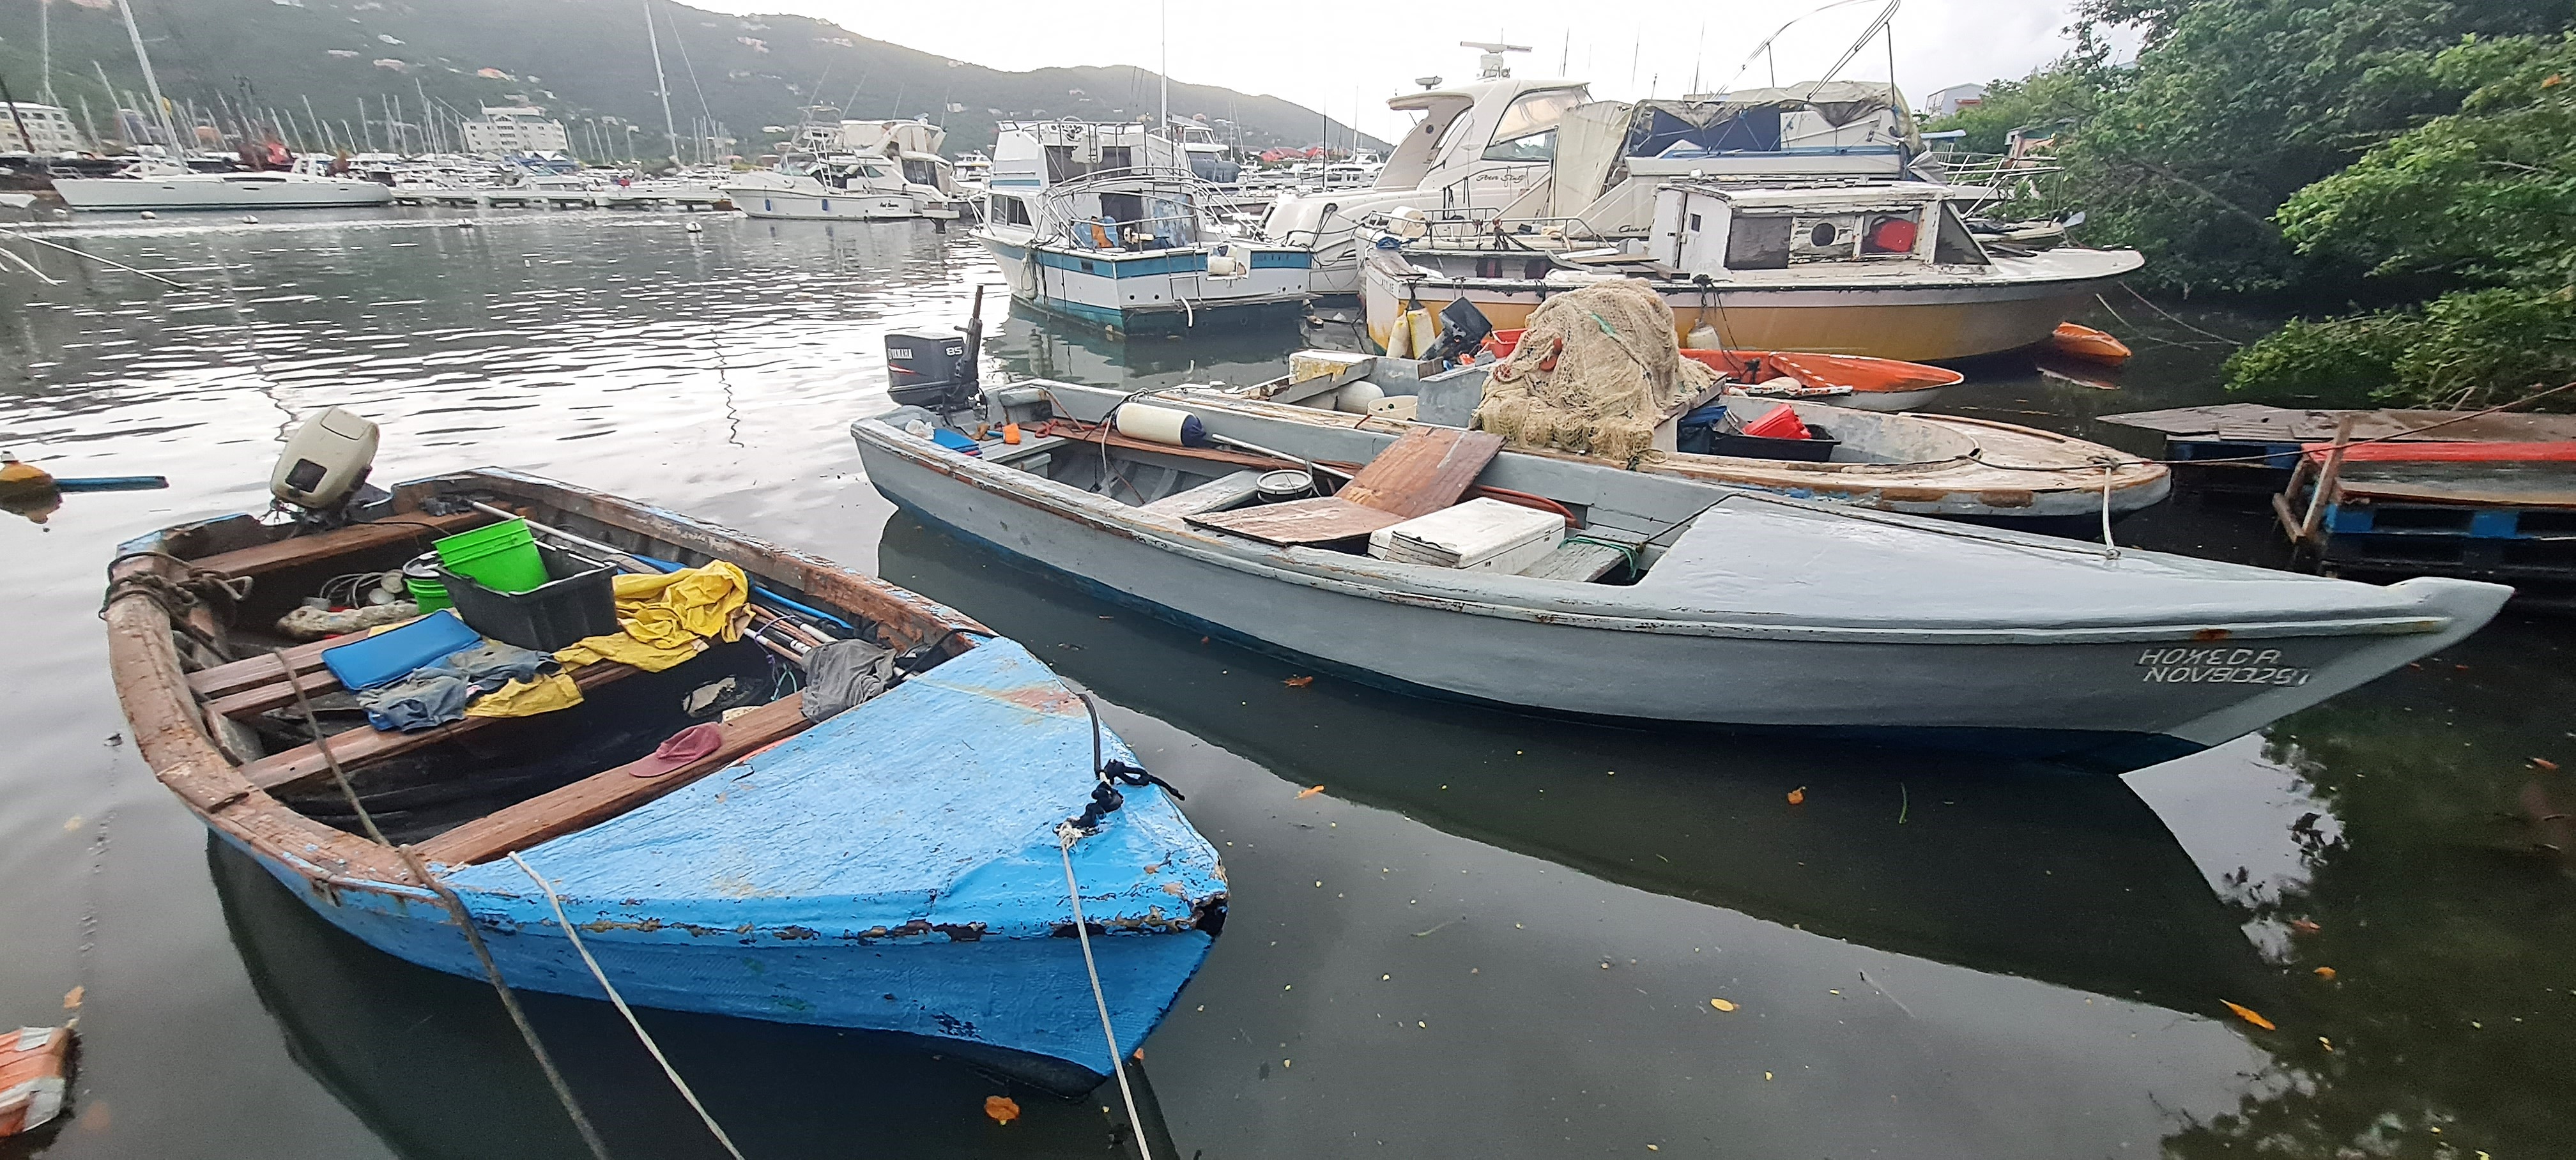 Fisherfolk landing site Tortola with boats